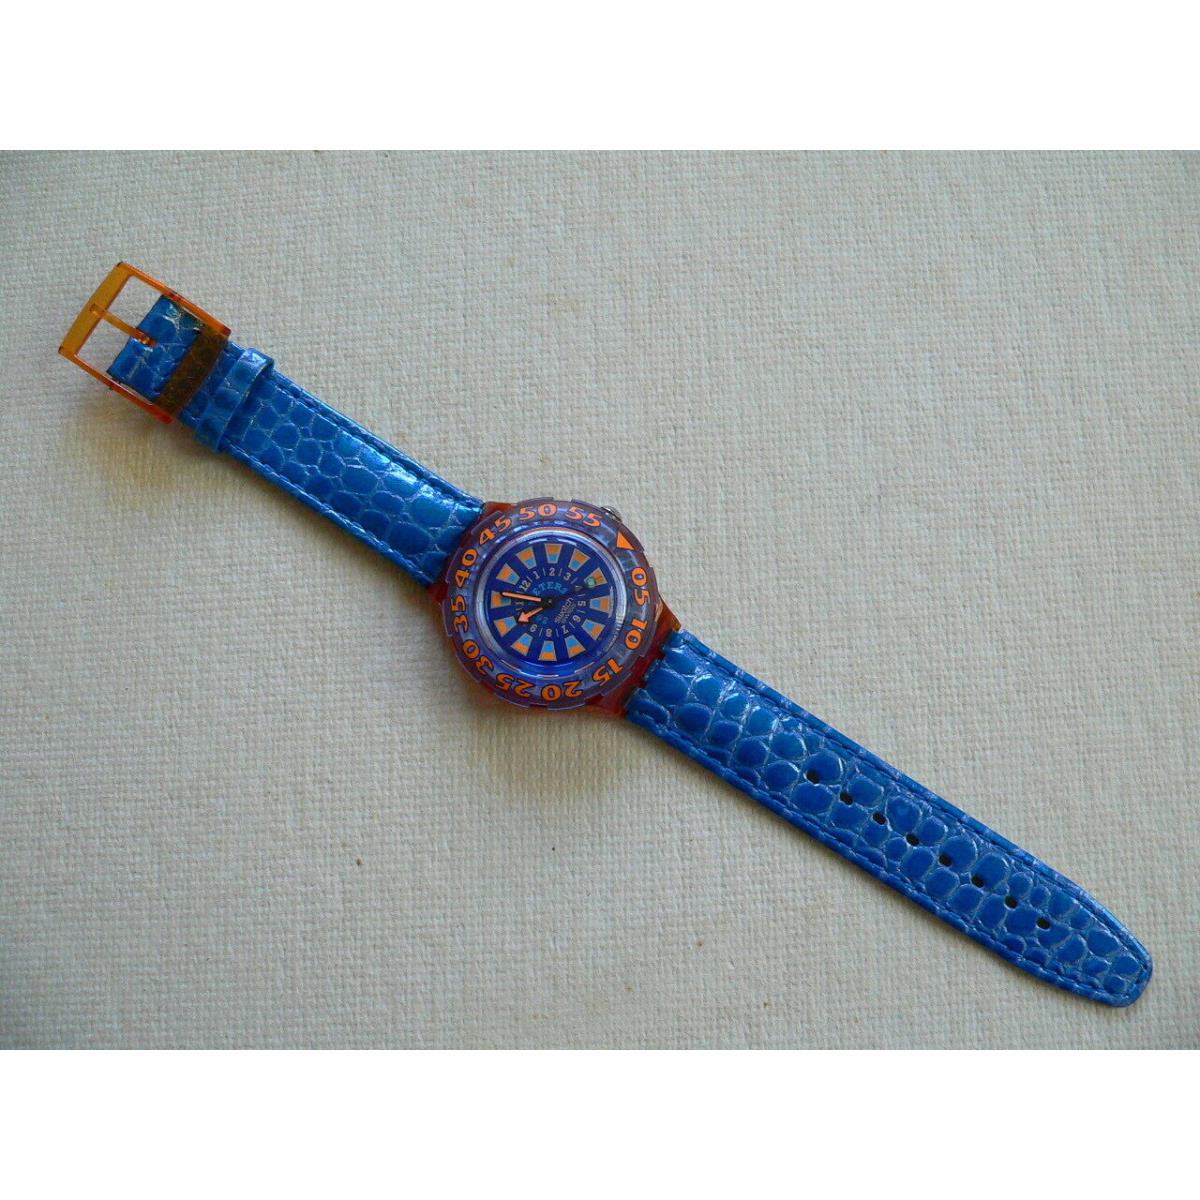 Swatch watch Scuba - Blue Dial, Blue Band 1